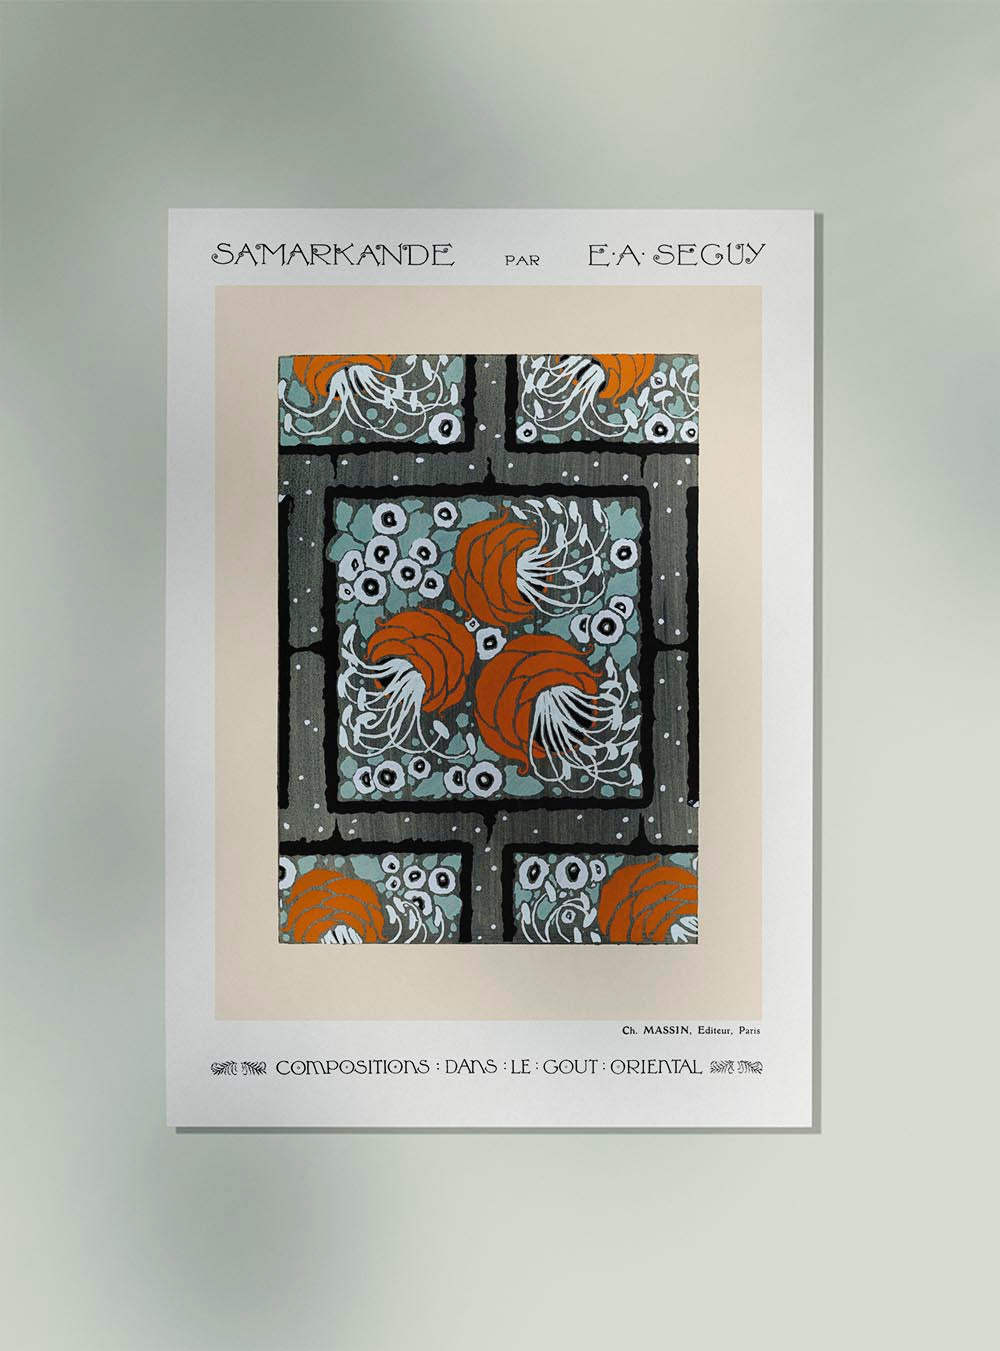 Samarkande Plate 01 by E.A. Séguy